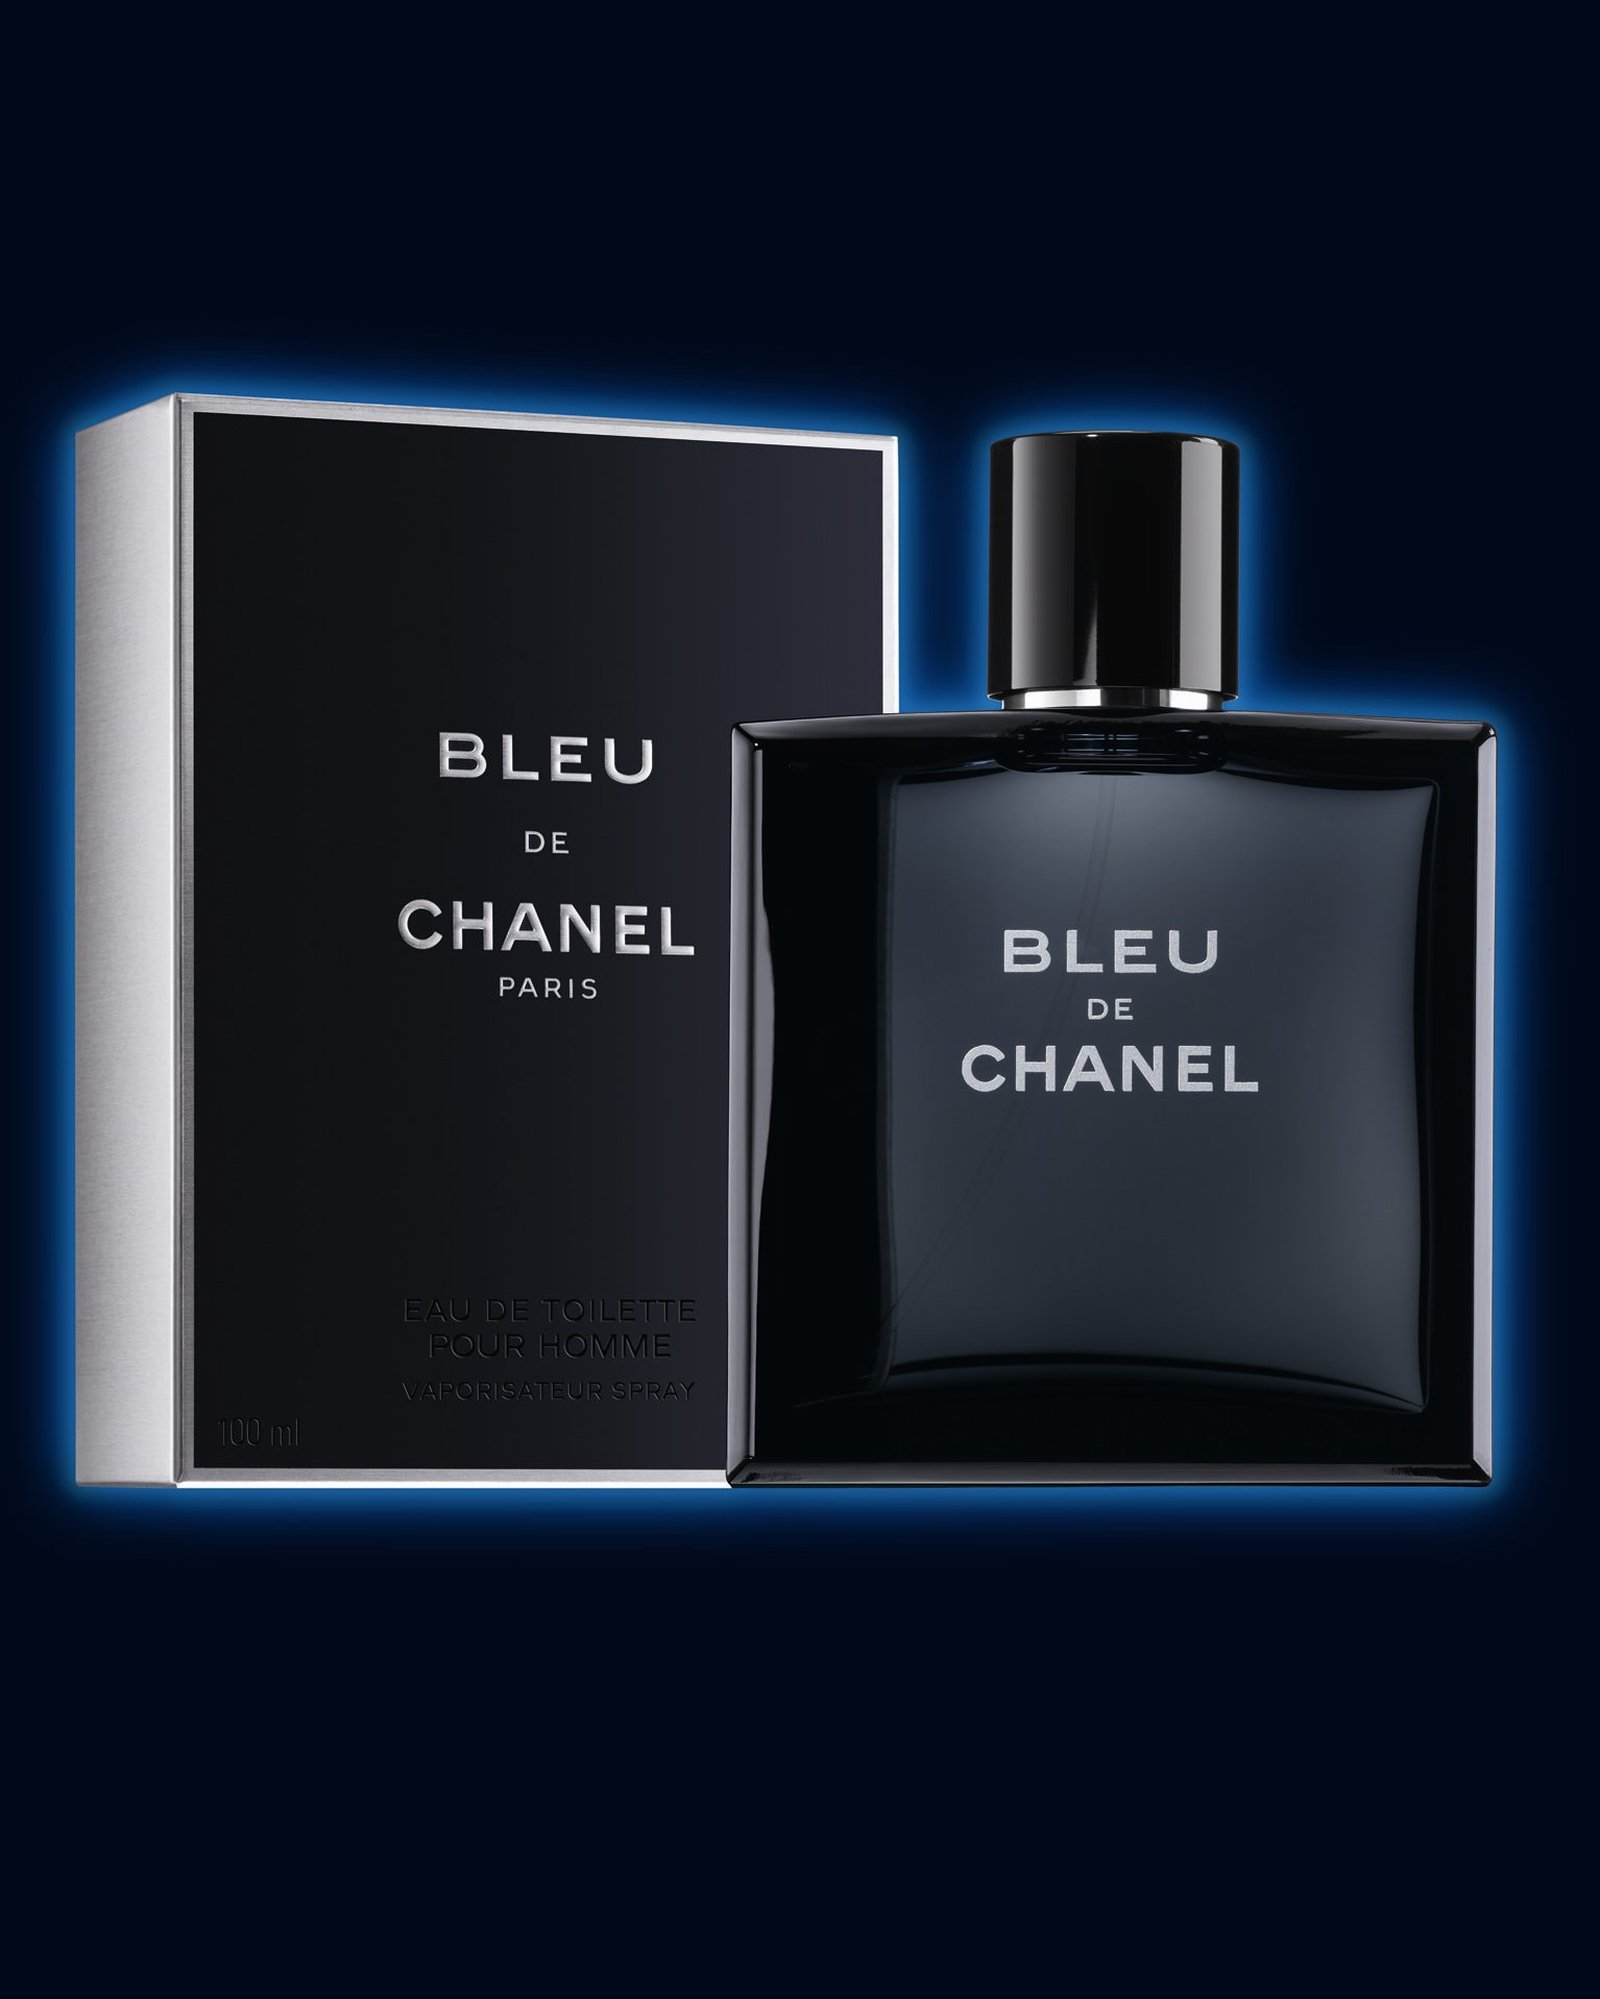 What's The Best Bleu De Chanel at Darrel Felipe blog